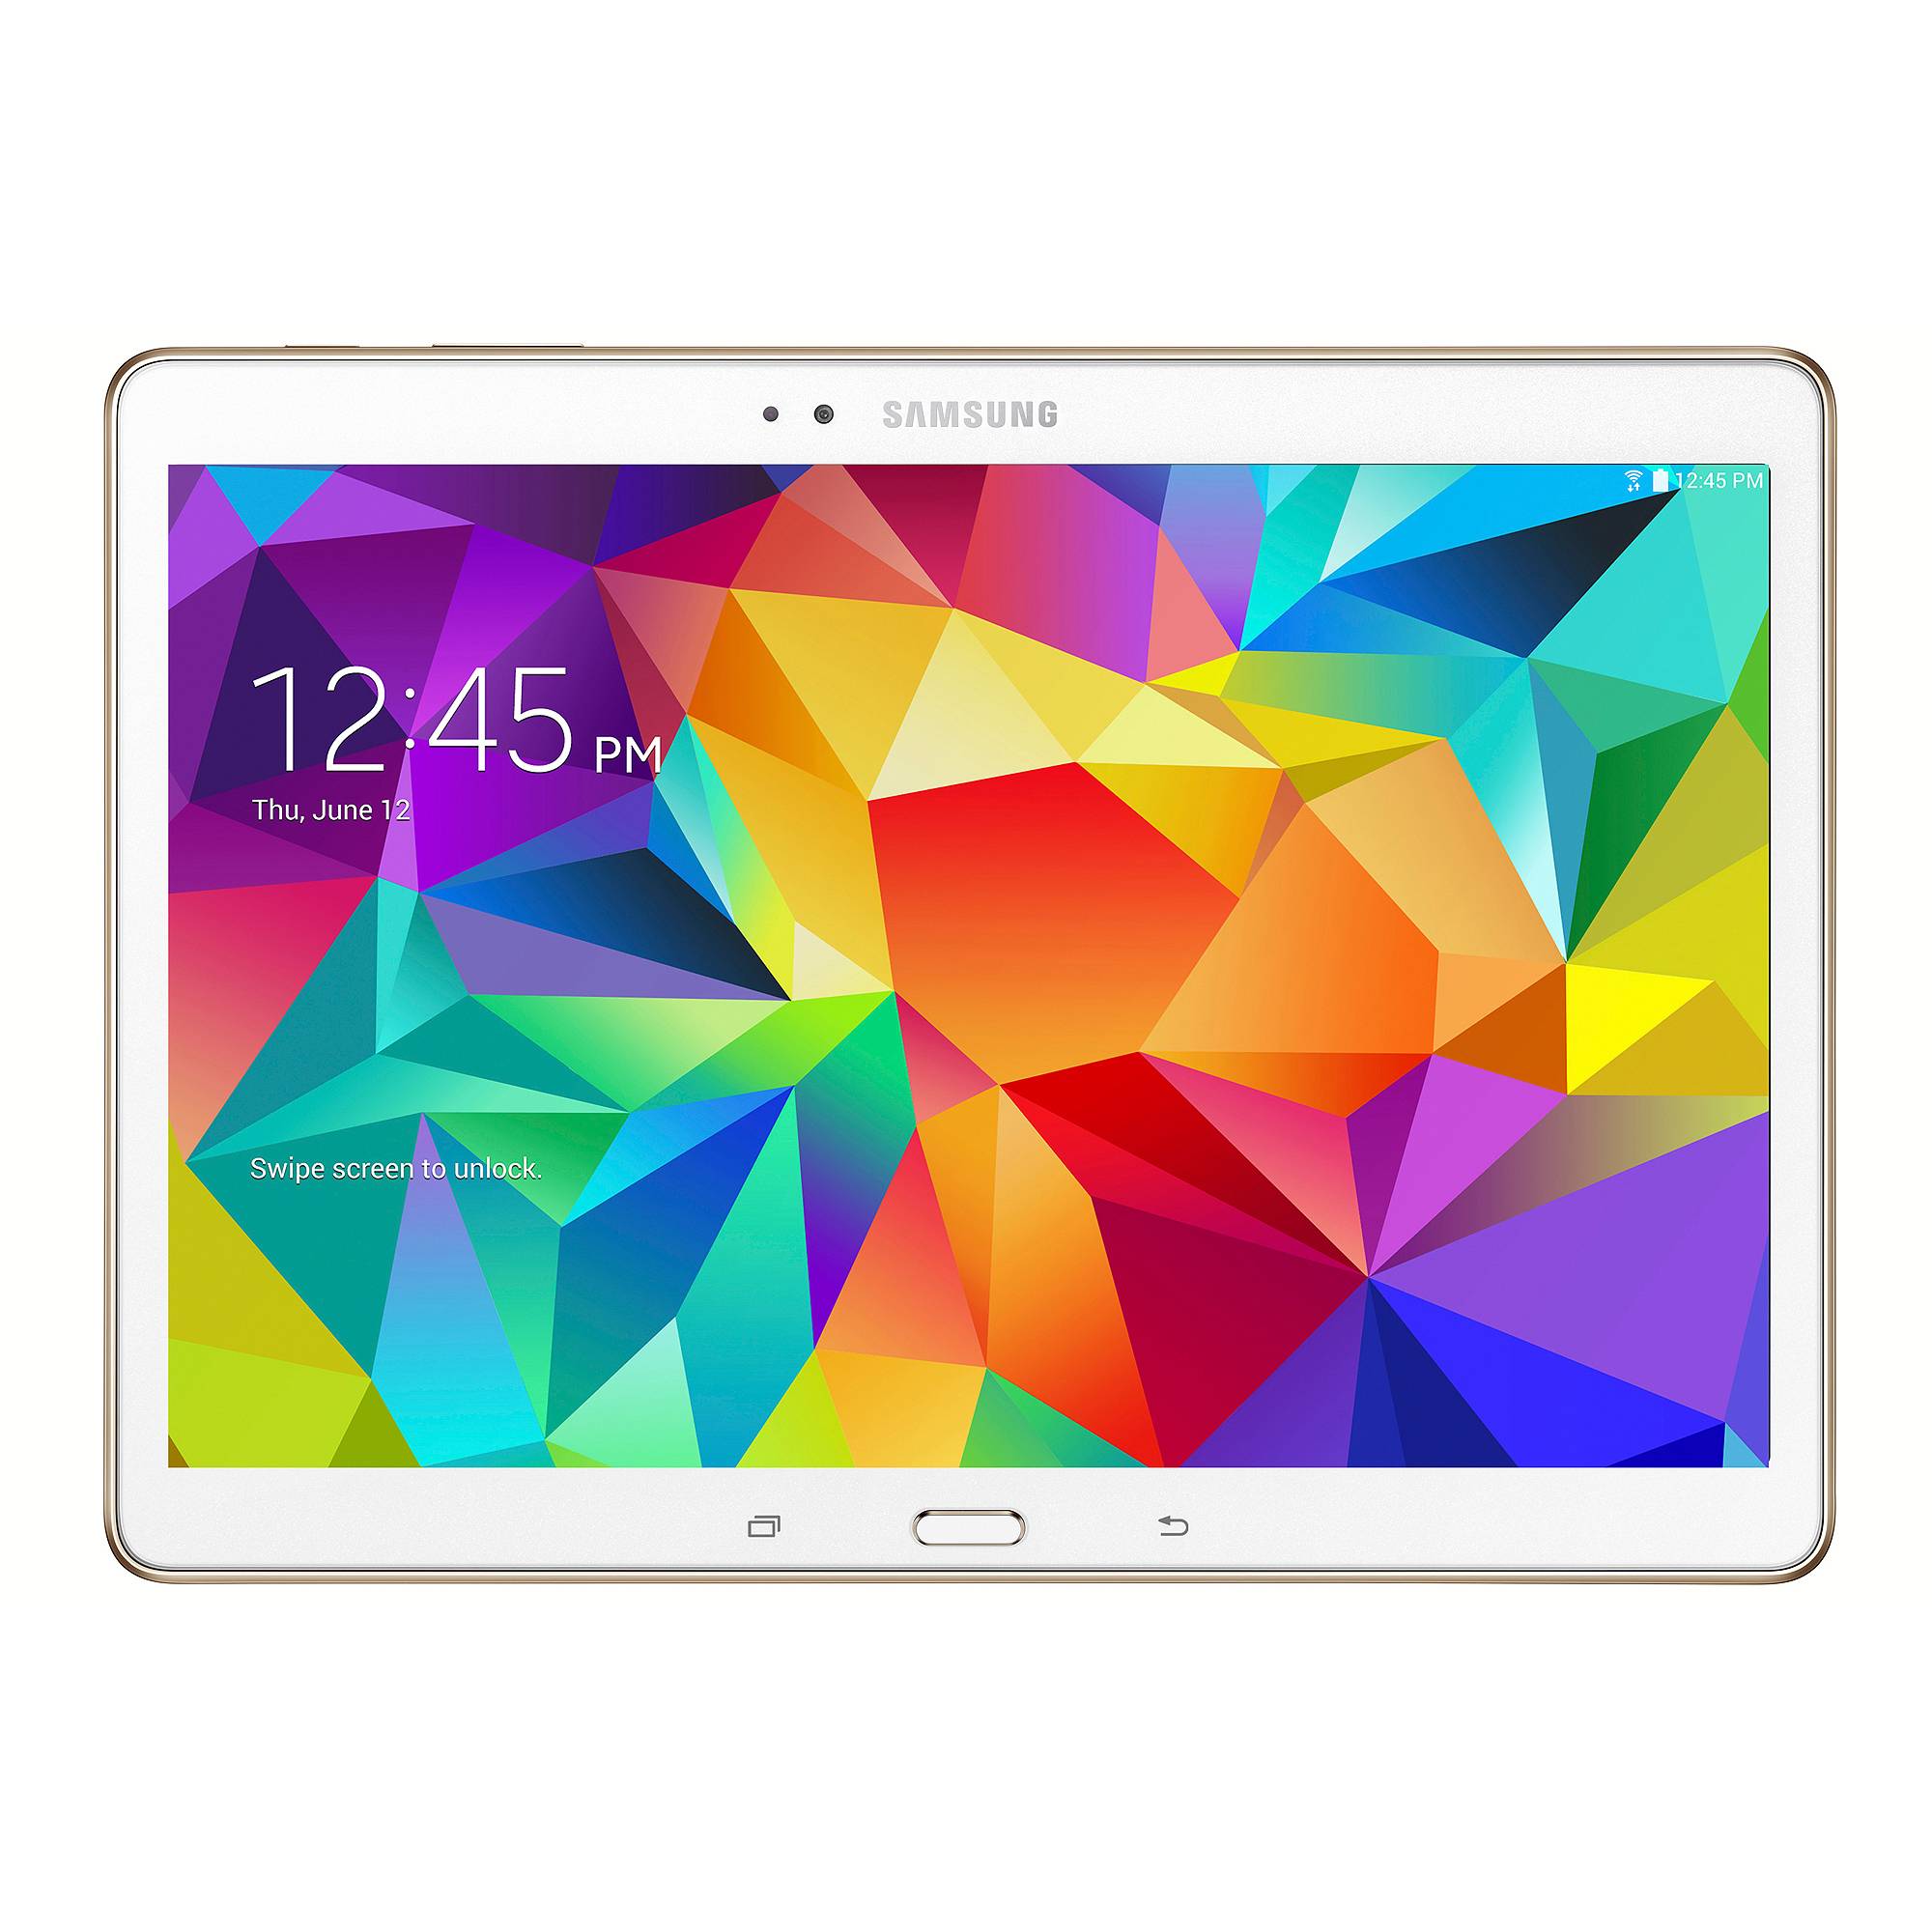 SAMSUNG Galaxy Tab S Android Tablet SM-T807V 10.5" Wi-Fi 4G (Verizon) 16GB - image 1 of 5